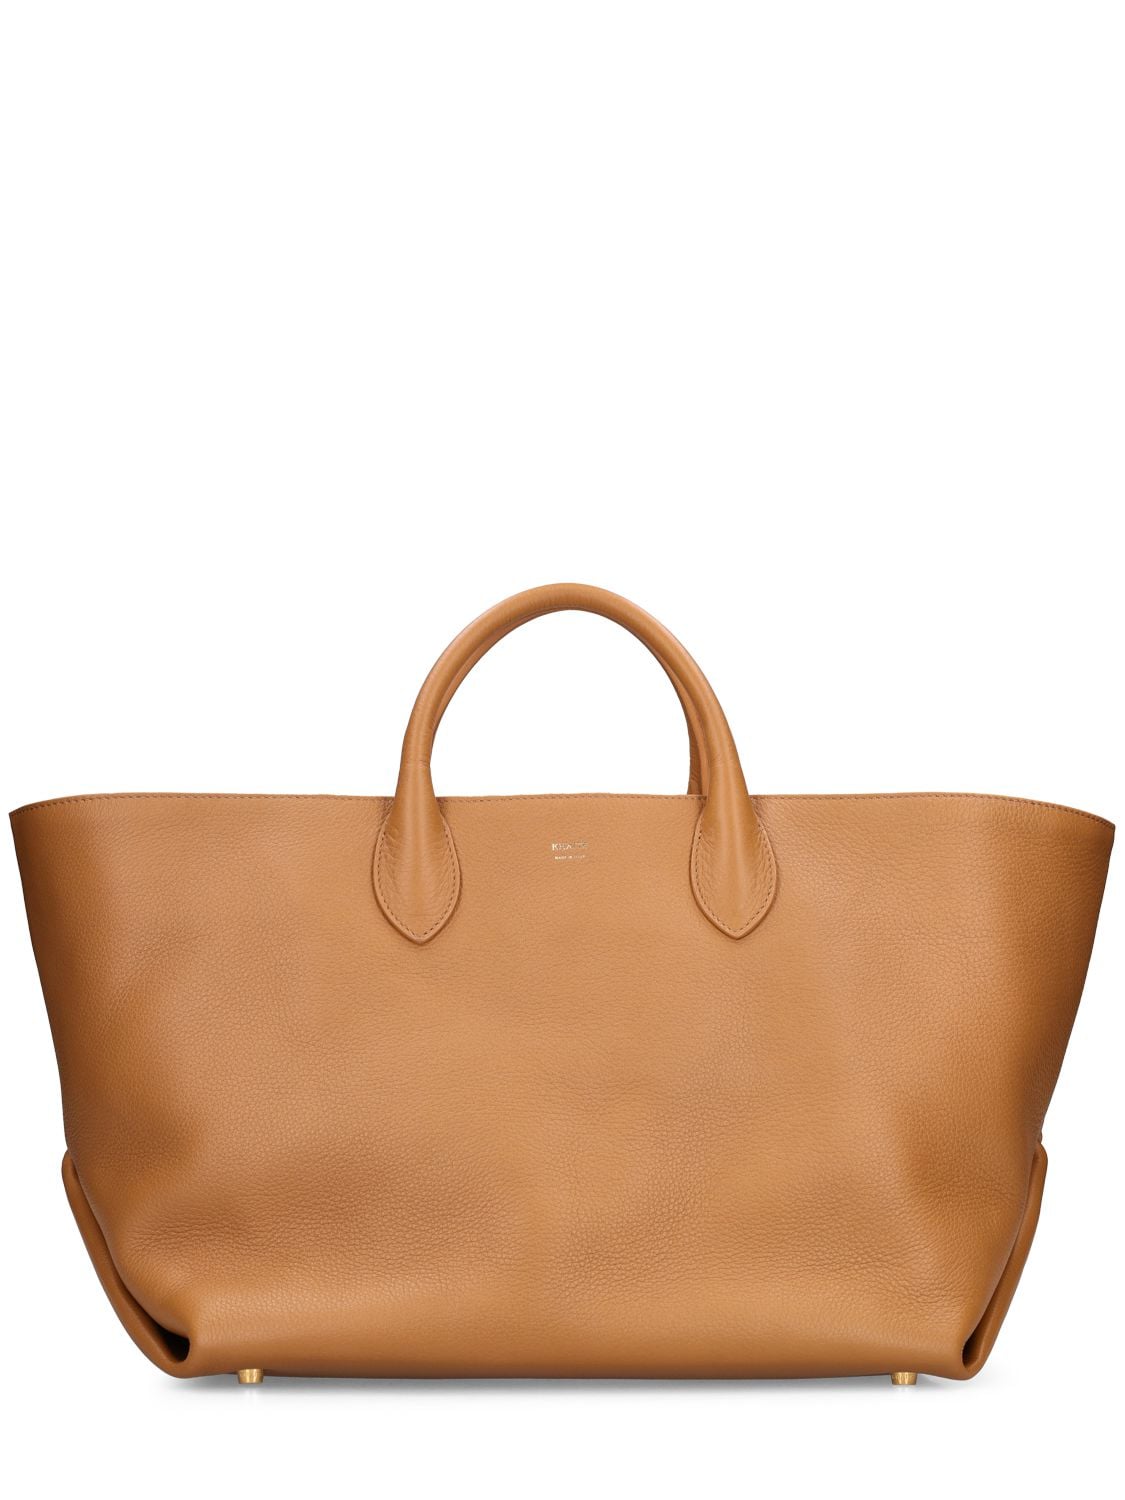 Image of Amelia Envelope Leather Tote Bag